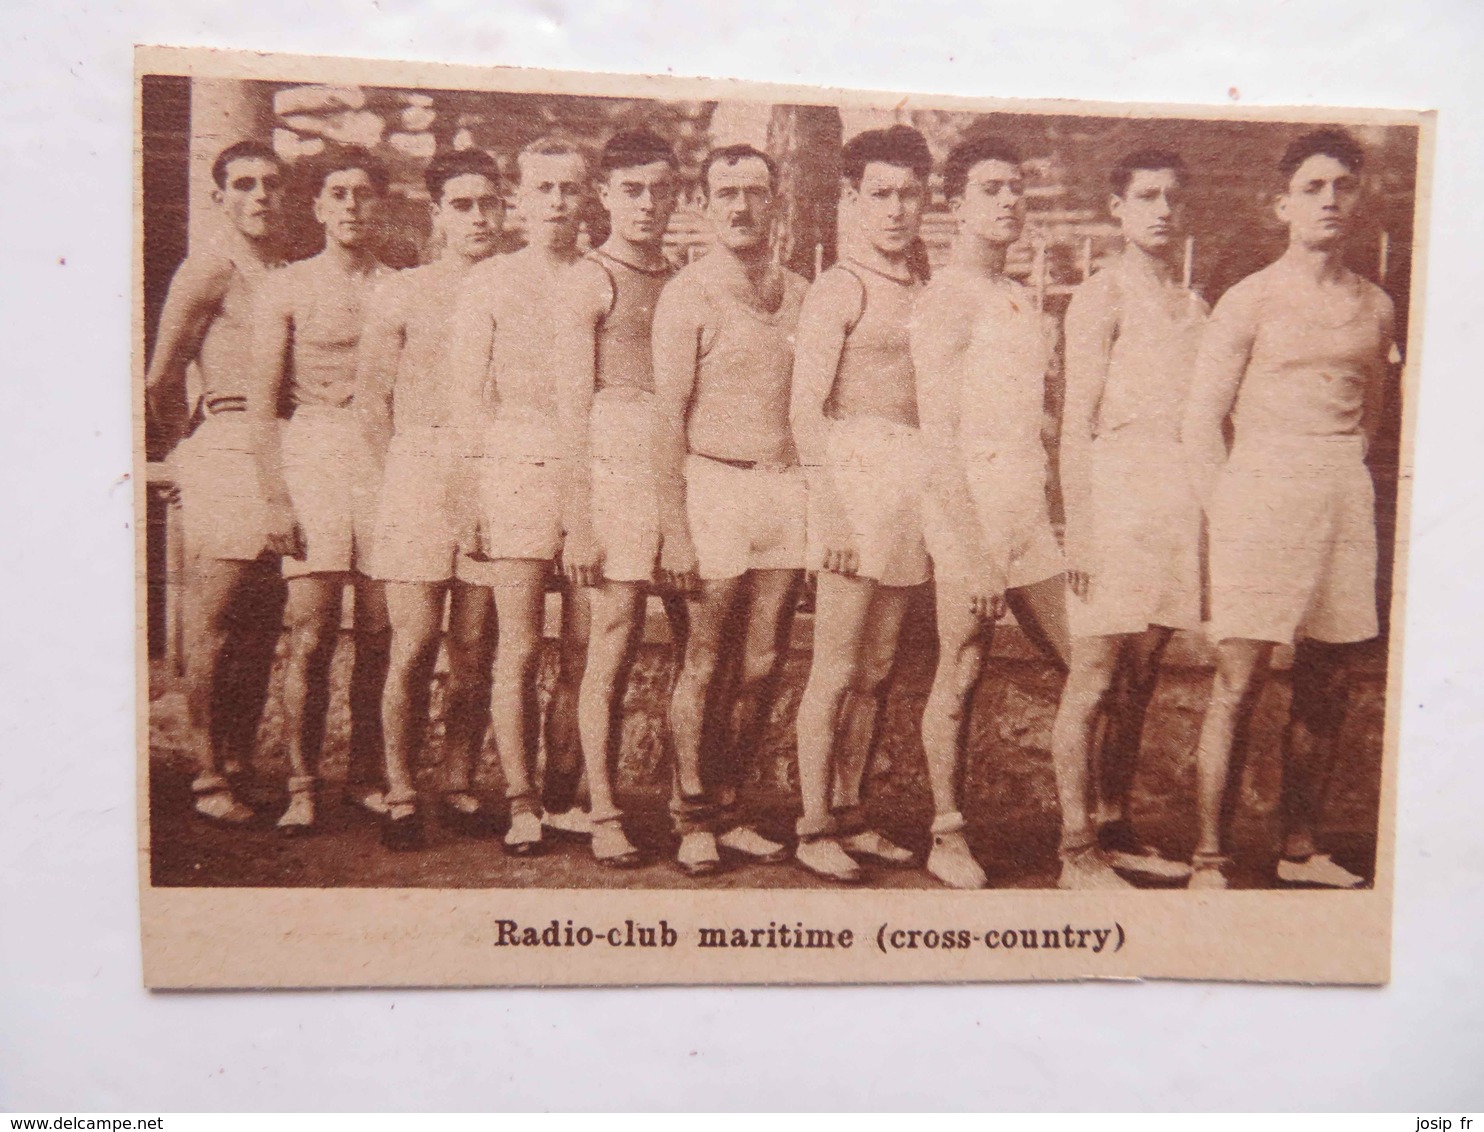 RADIO-CLUB MARITIME ÉQUIPE DE CROSS-COUNTRY— PHOTO DE JOURNAL: 08/1932 - Boats